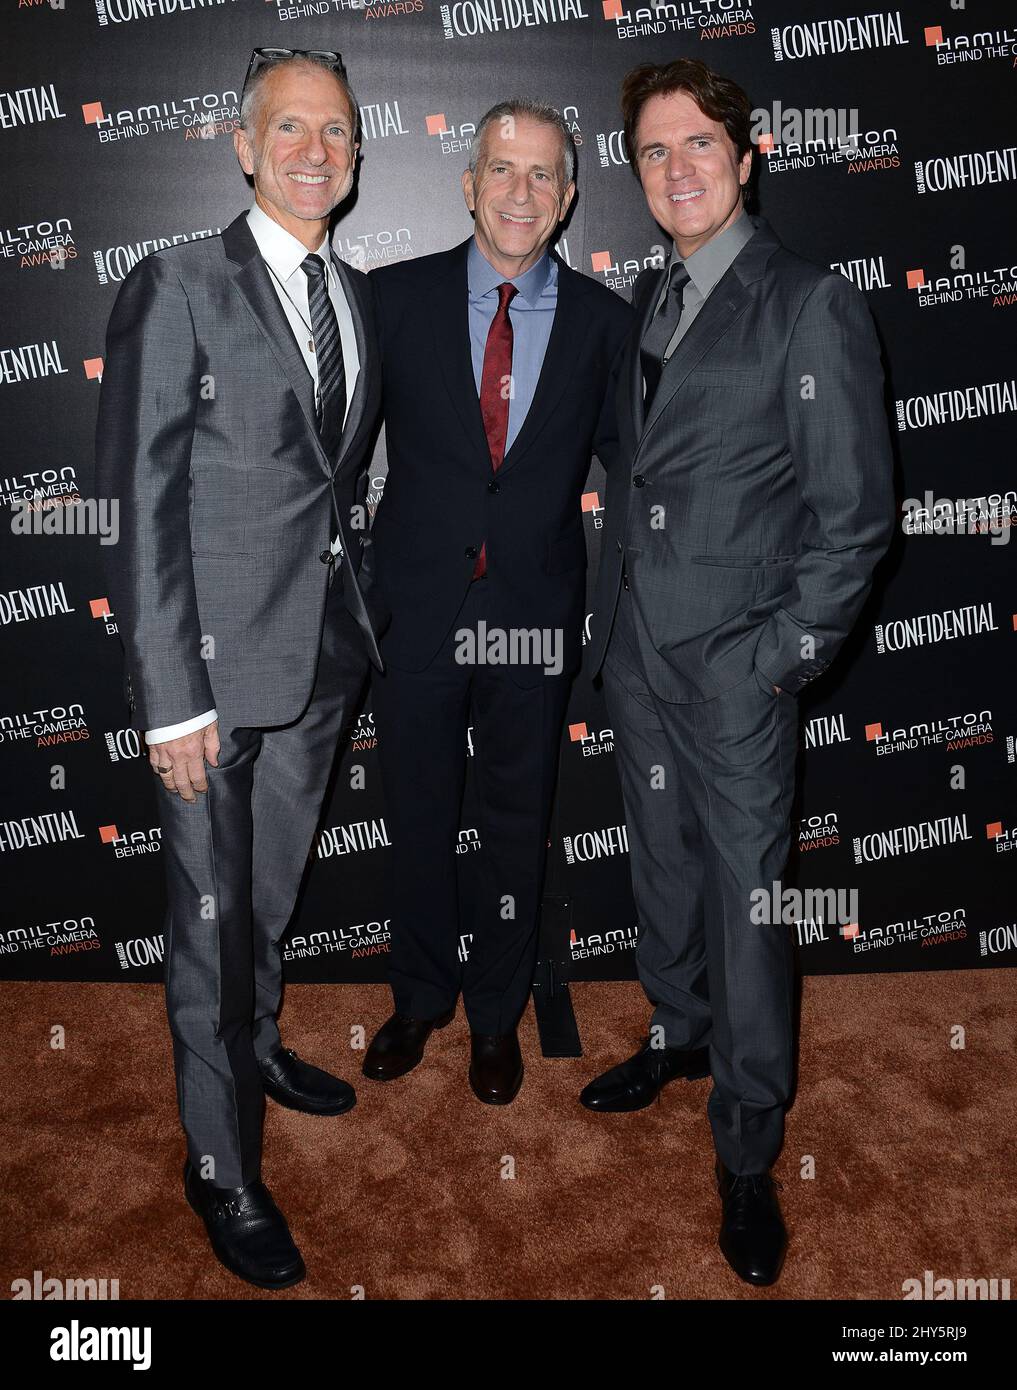 John DeLuca, Marc Platt, Rob Marshall attending the 8th Annual Hamilton Behind The Camera Awards Stock Photo